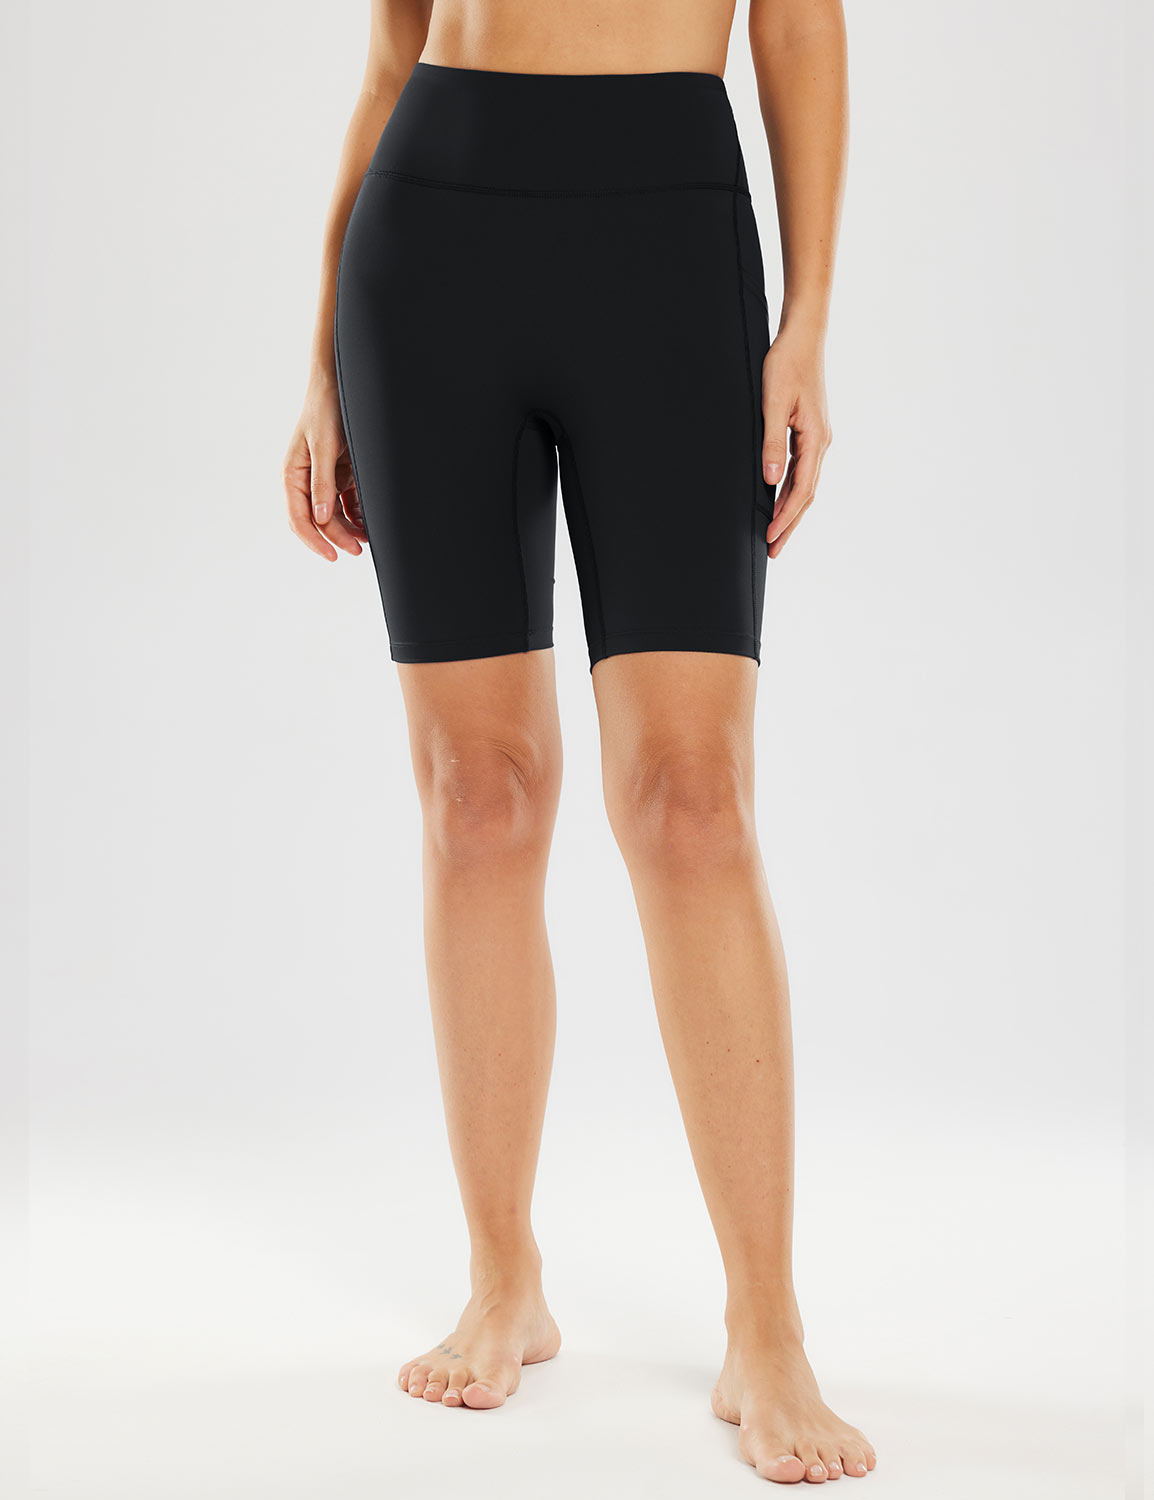 Baleaf Women's Sweatleaf High-Rise Pocketed Shorts ebh012 Anthracite Main